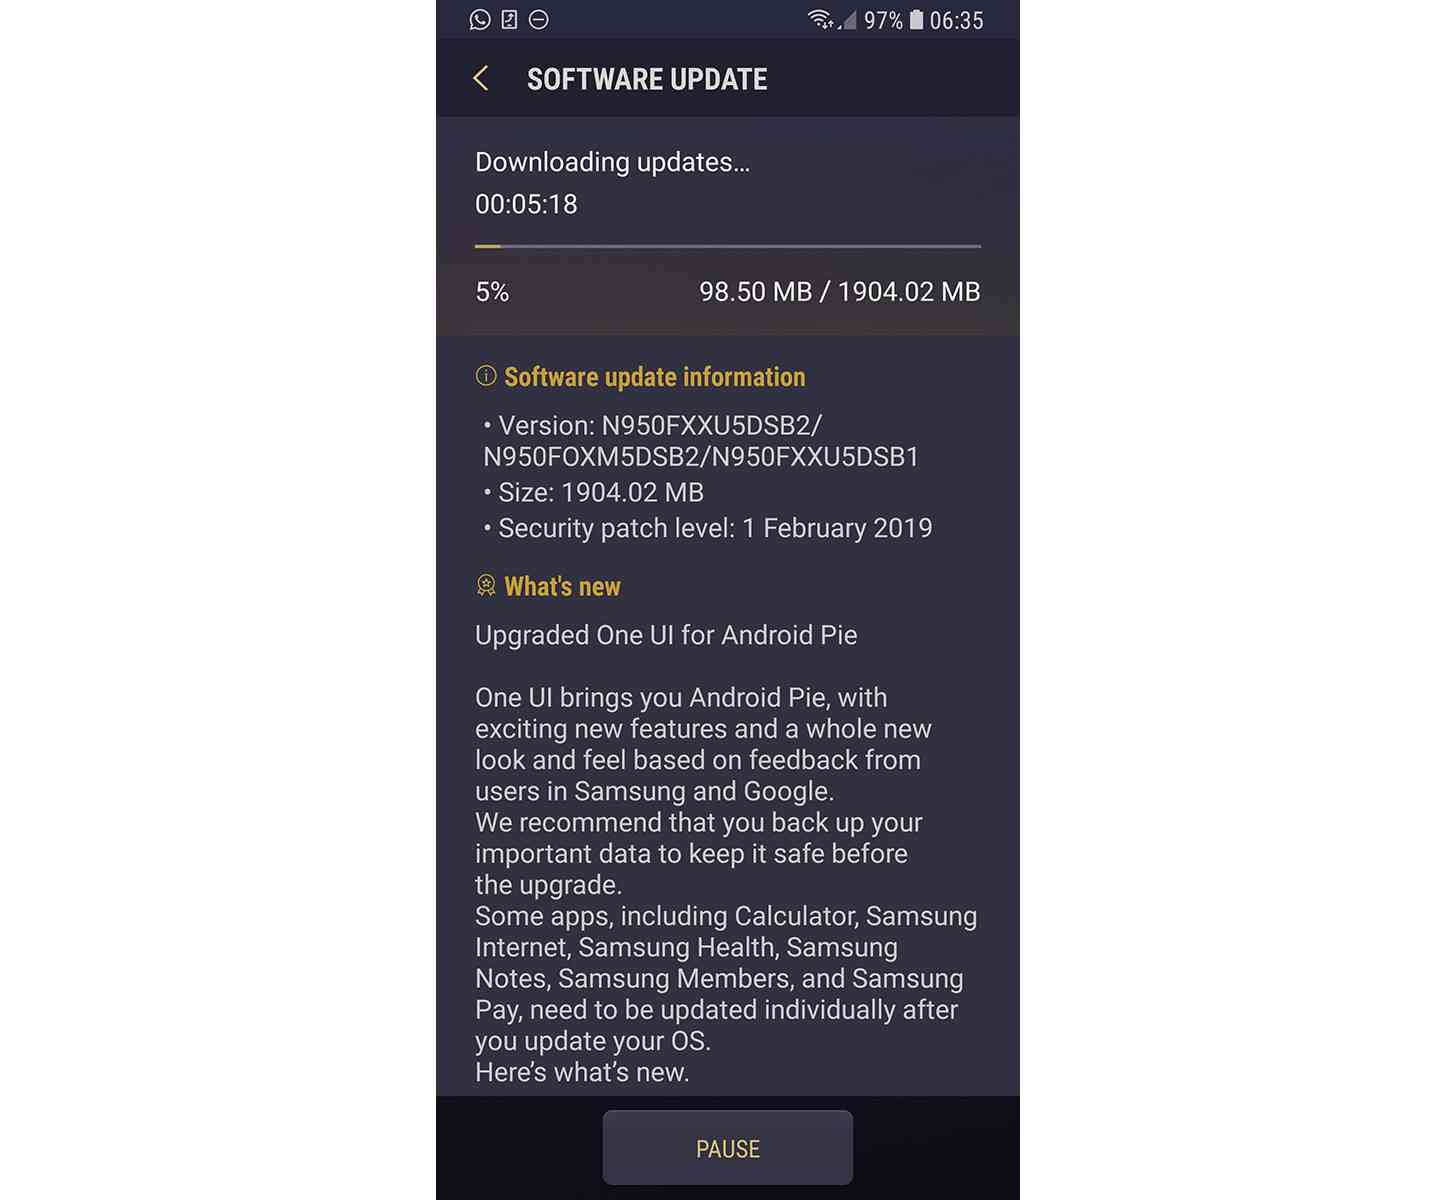 Samsung Galaxy Note 8 Android Pie update